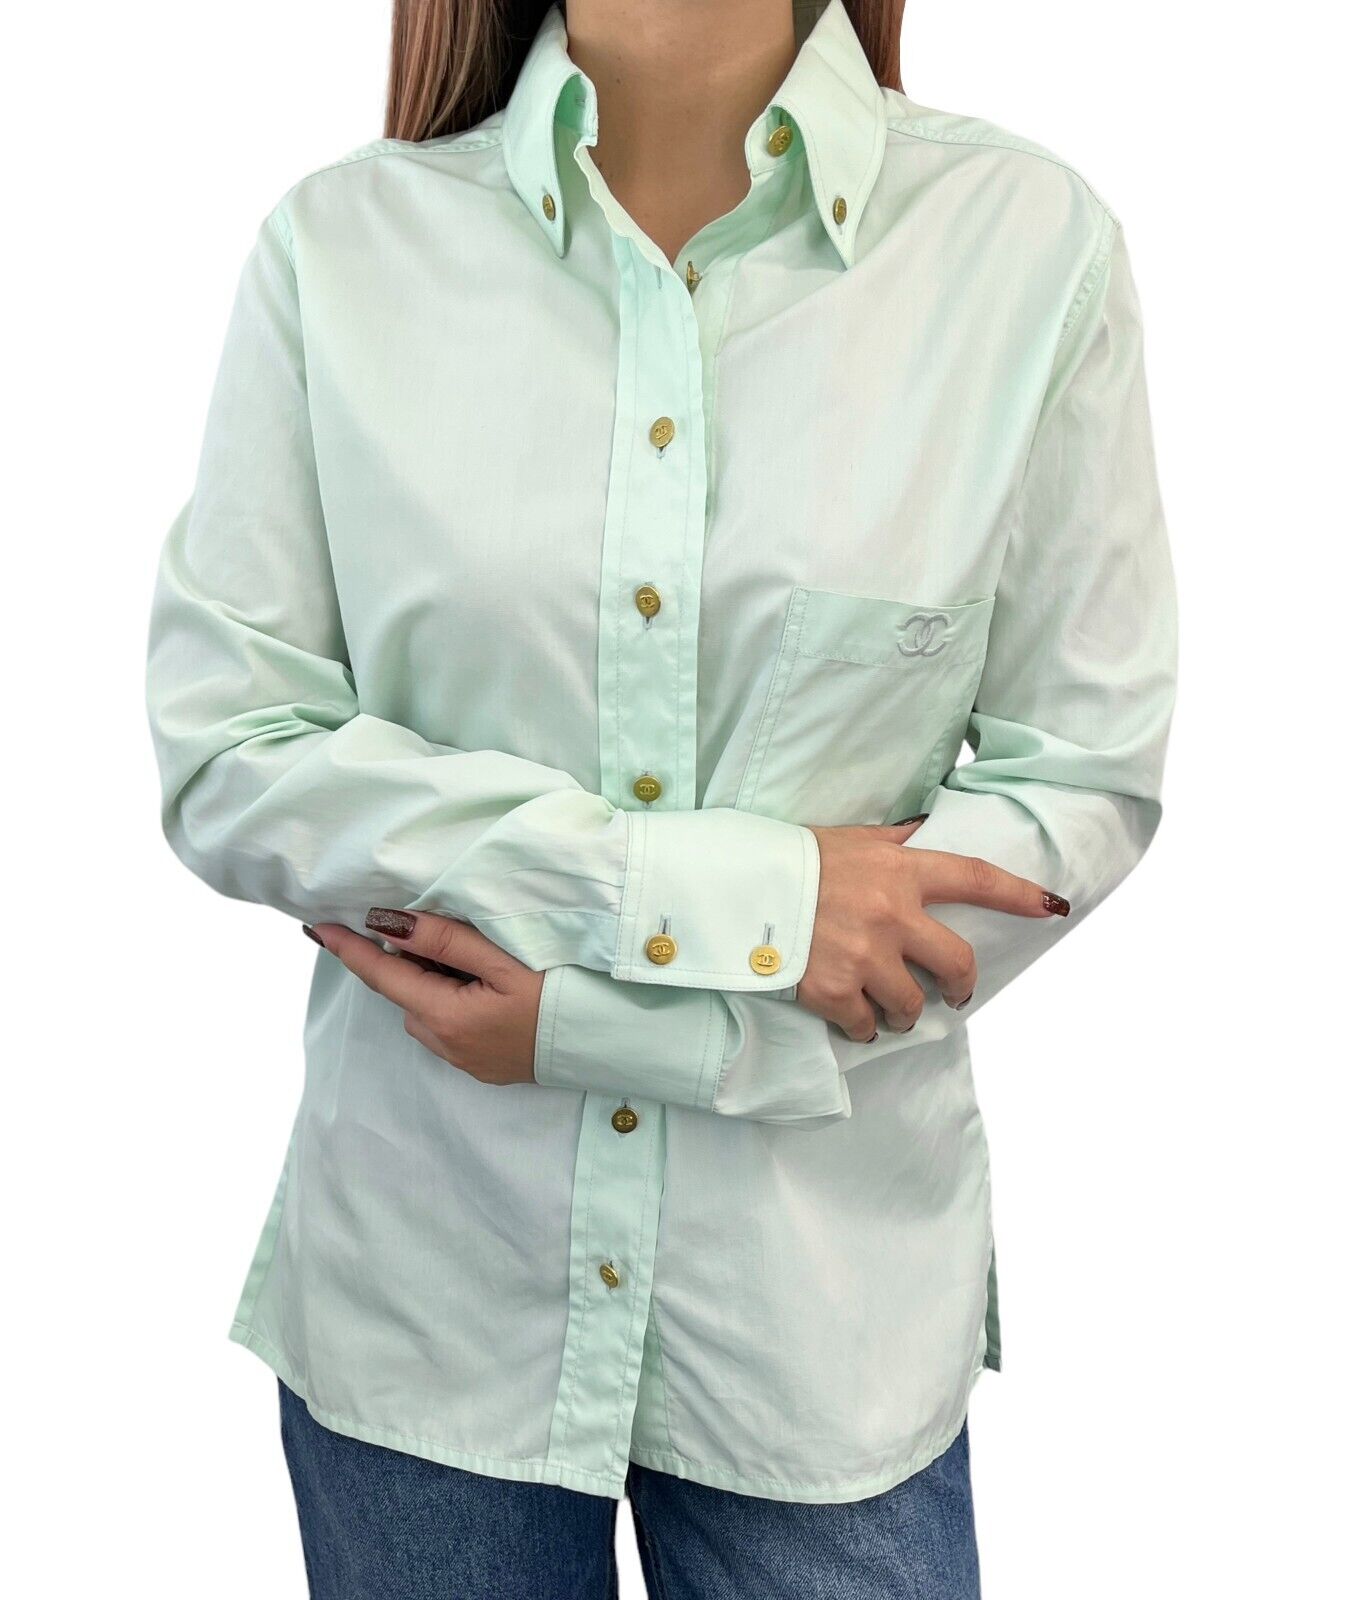 CHANEL Vintage CC Mark Button Shirt Top Pocket Light Green Cotton Rank AB+